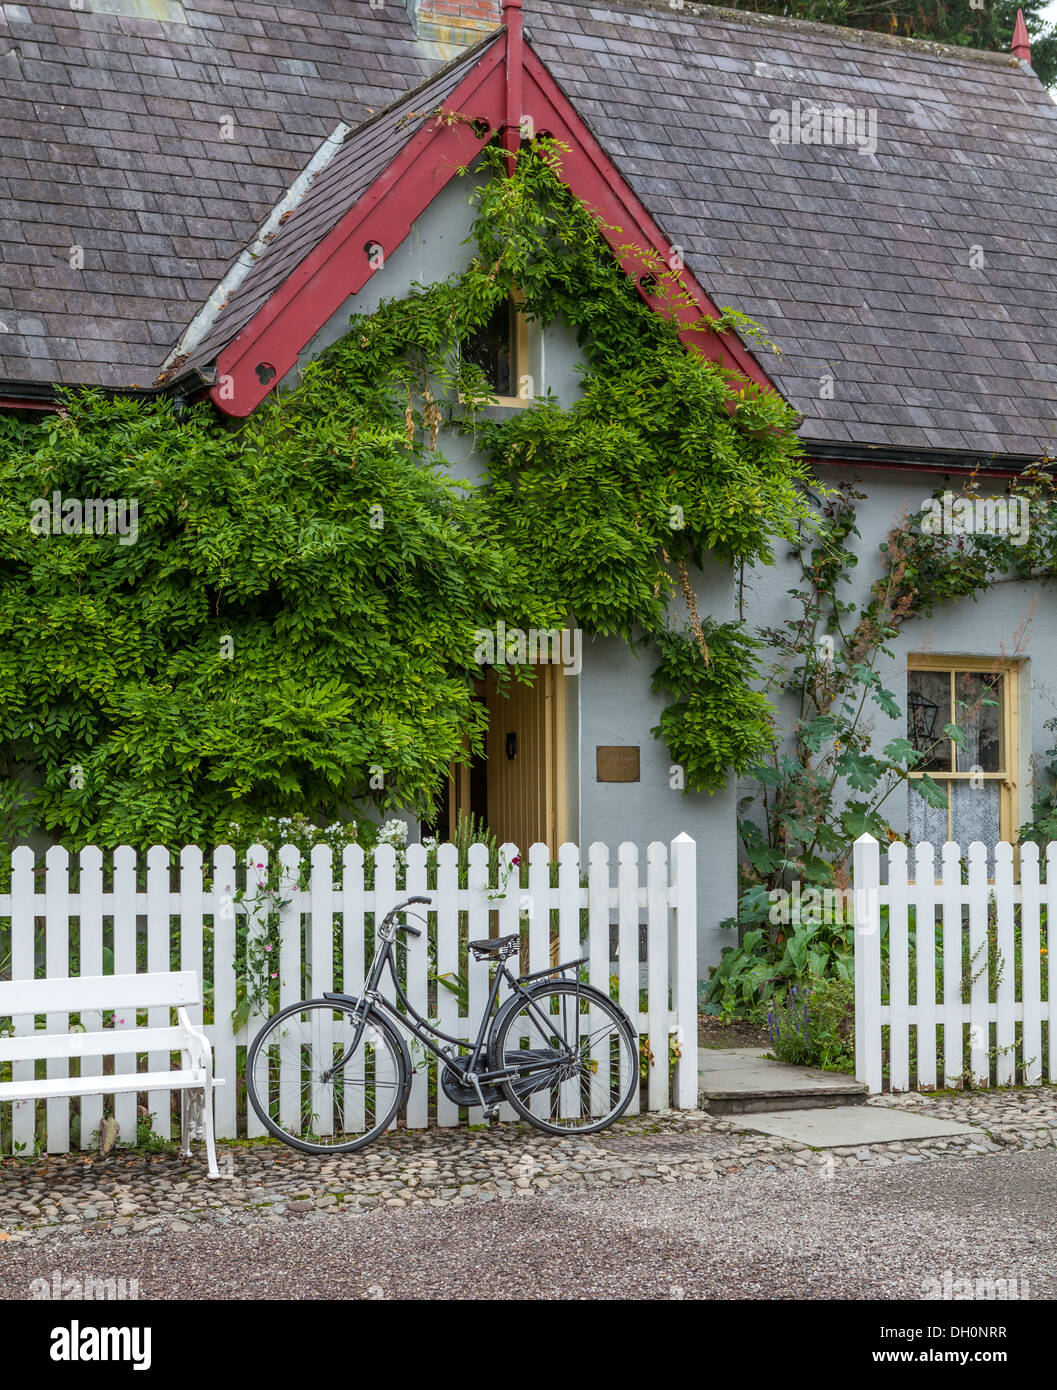 County Clare, Ireland Bunratty Folk Park, village street scene Stock Photo